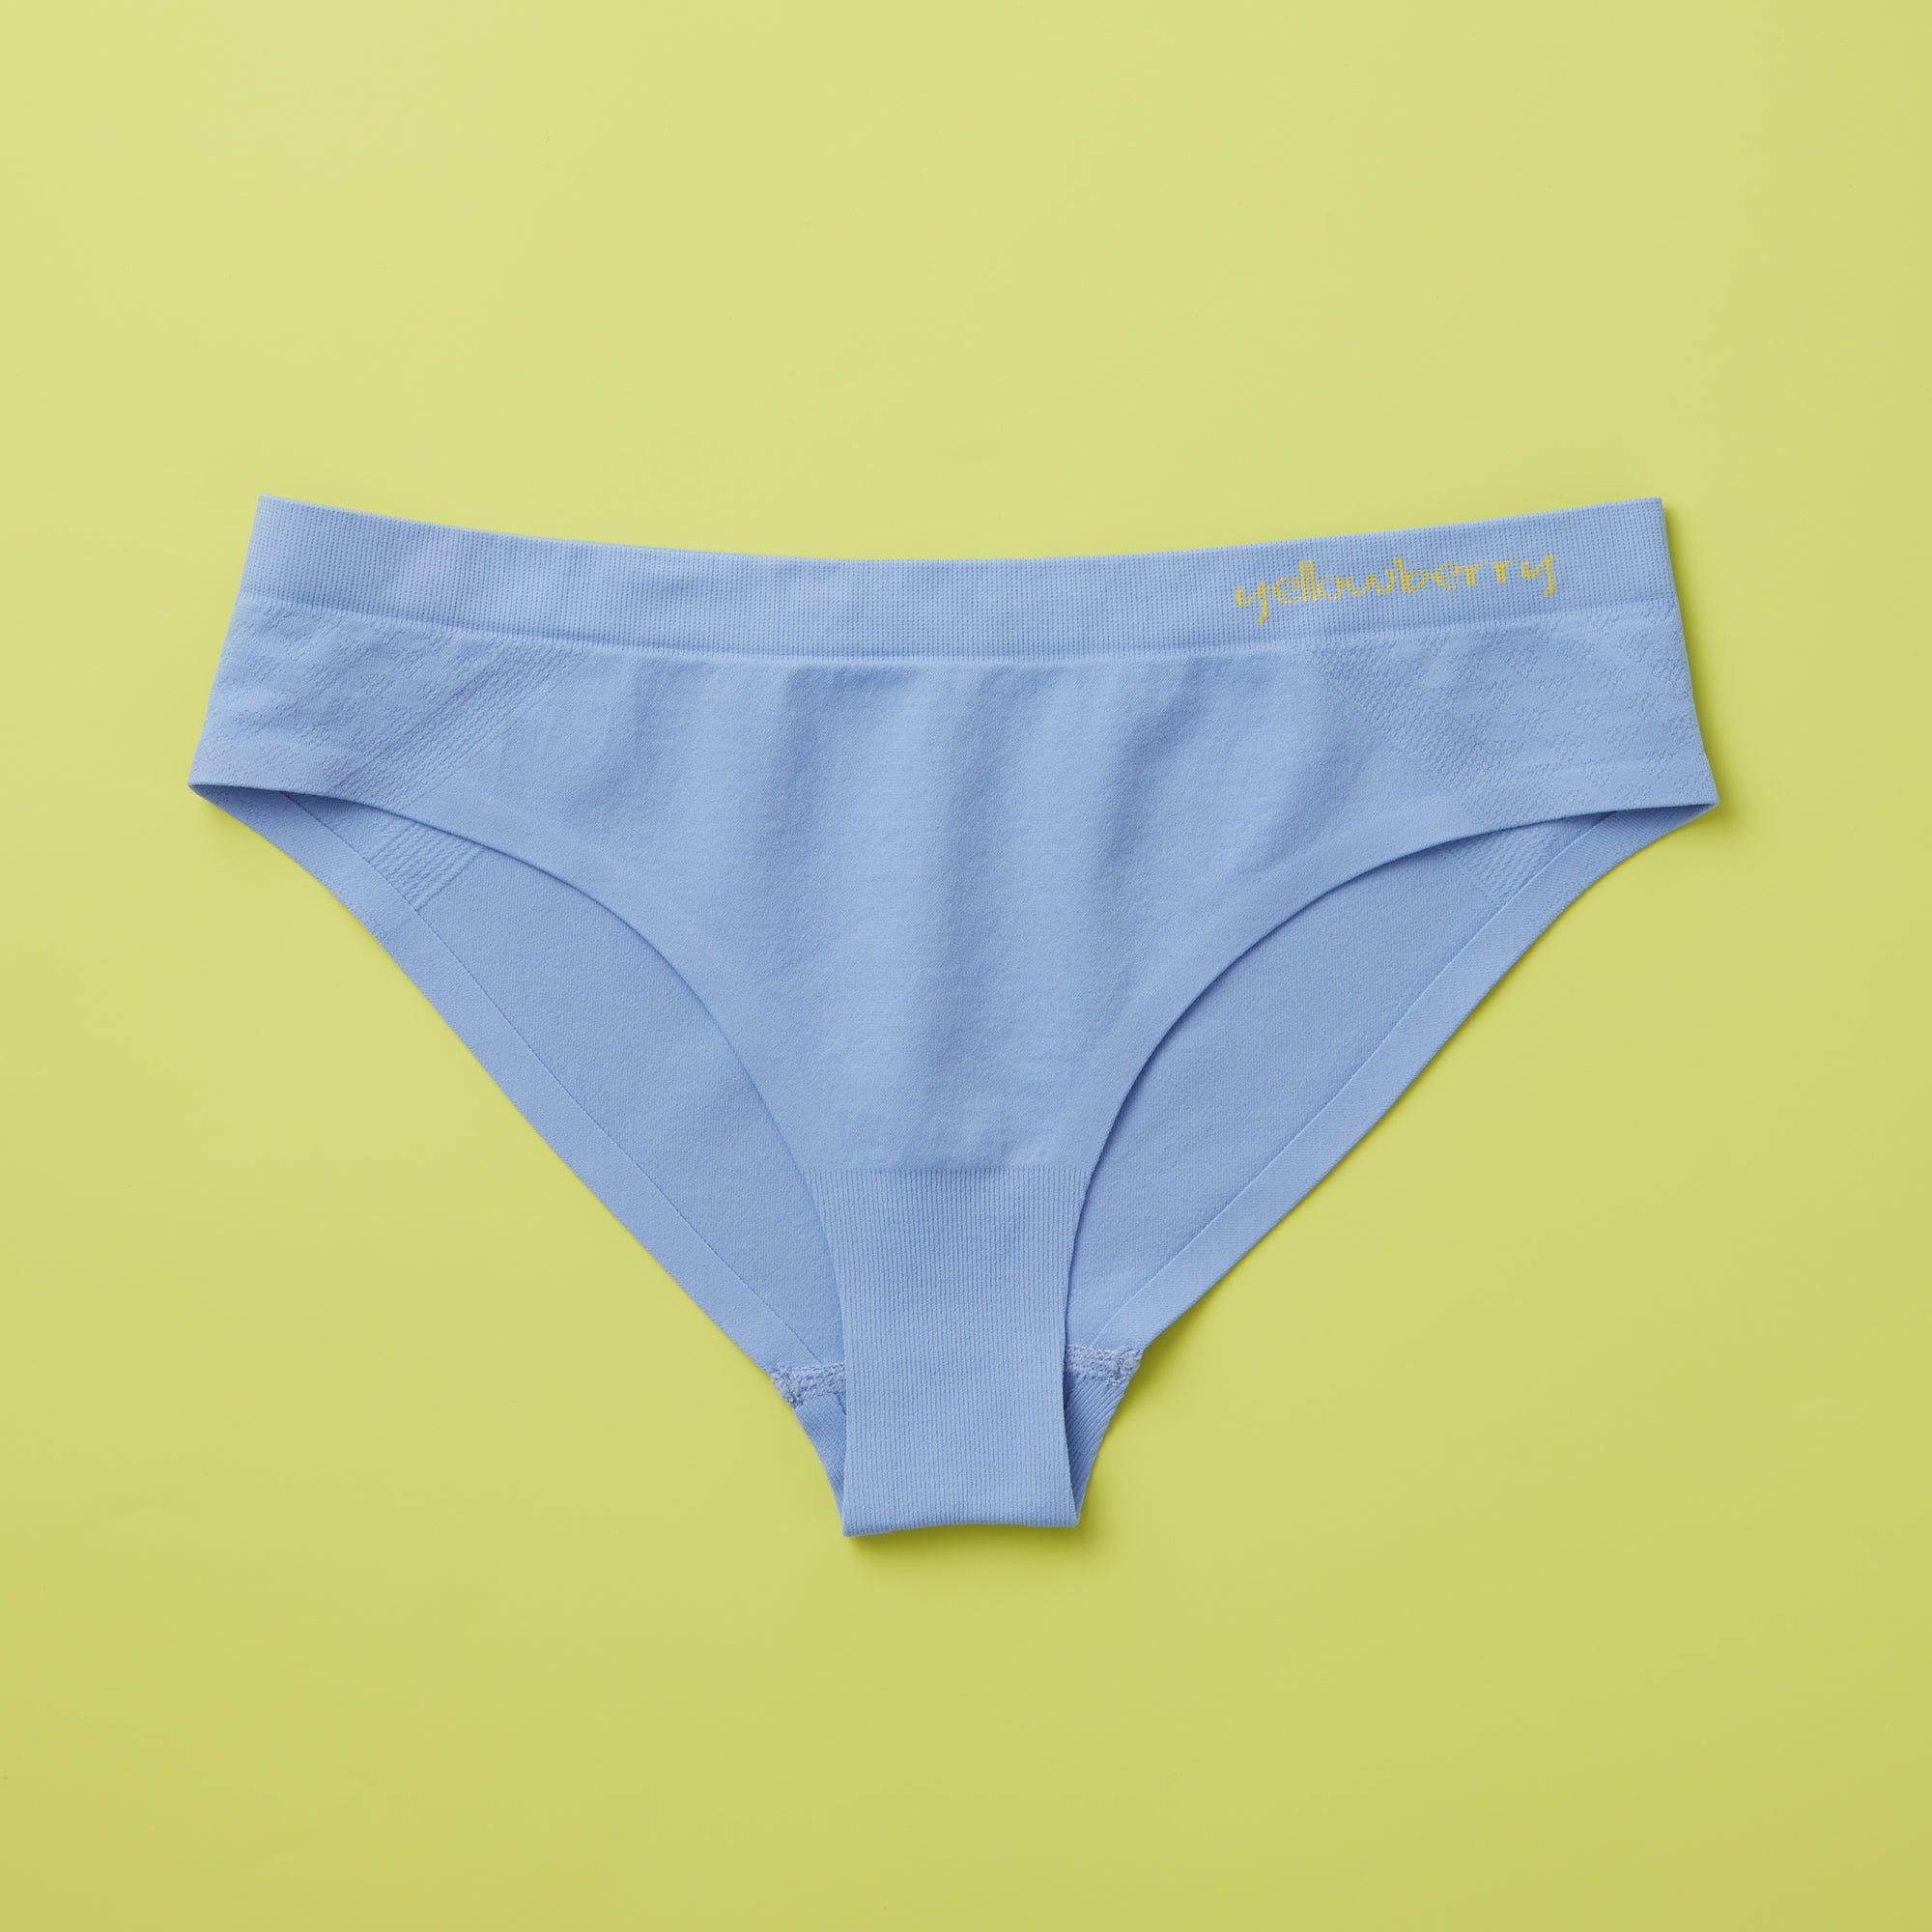  Girls Comfortable Seamless Underwear Hipster Panties  Multipack Sizes 6/8/10/12